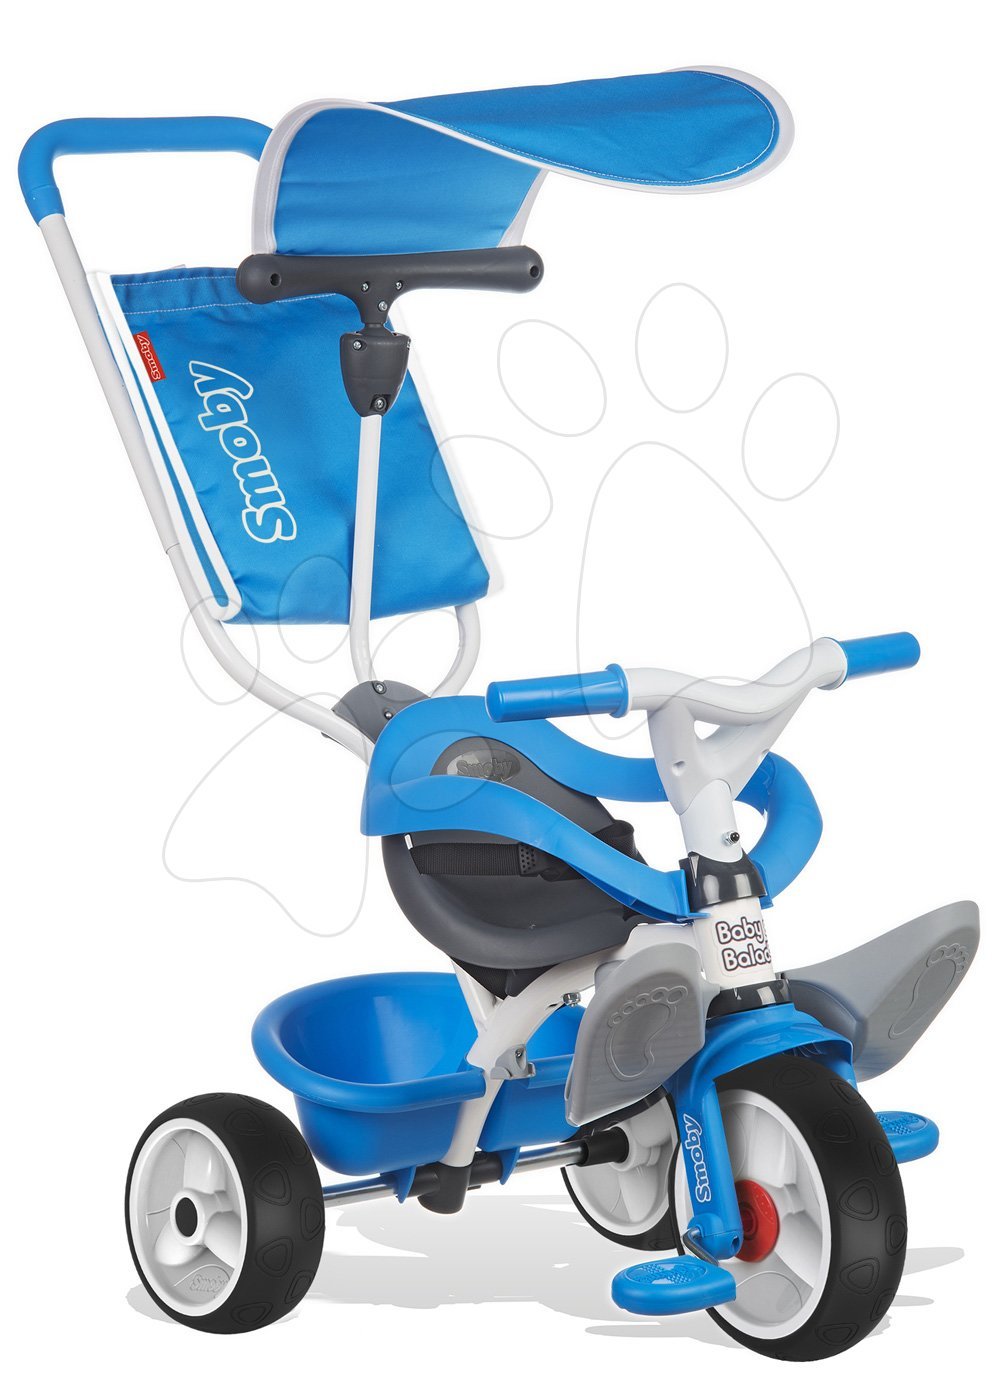 E-shop Smoby detská trojkolka s ohrádkou Baby Balade Blue 444208 modro-biela